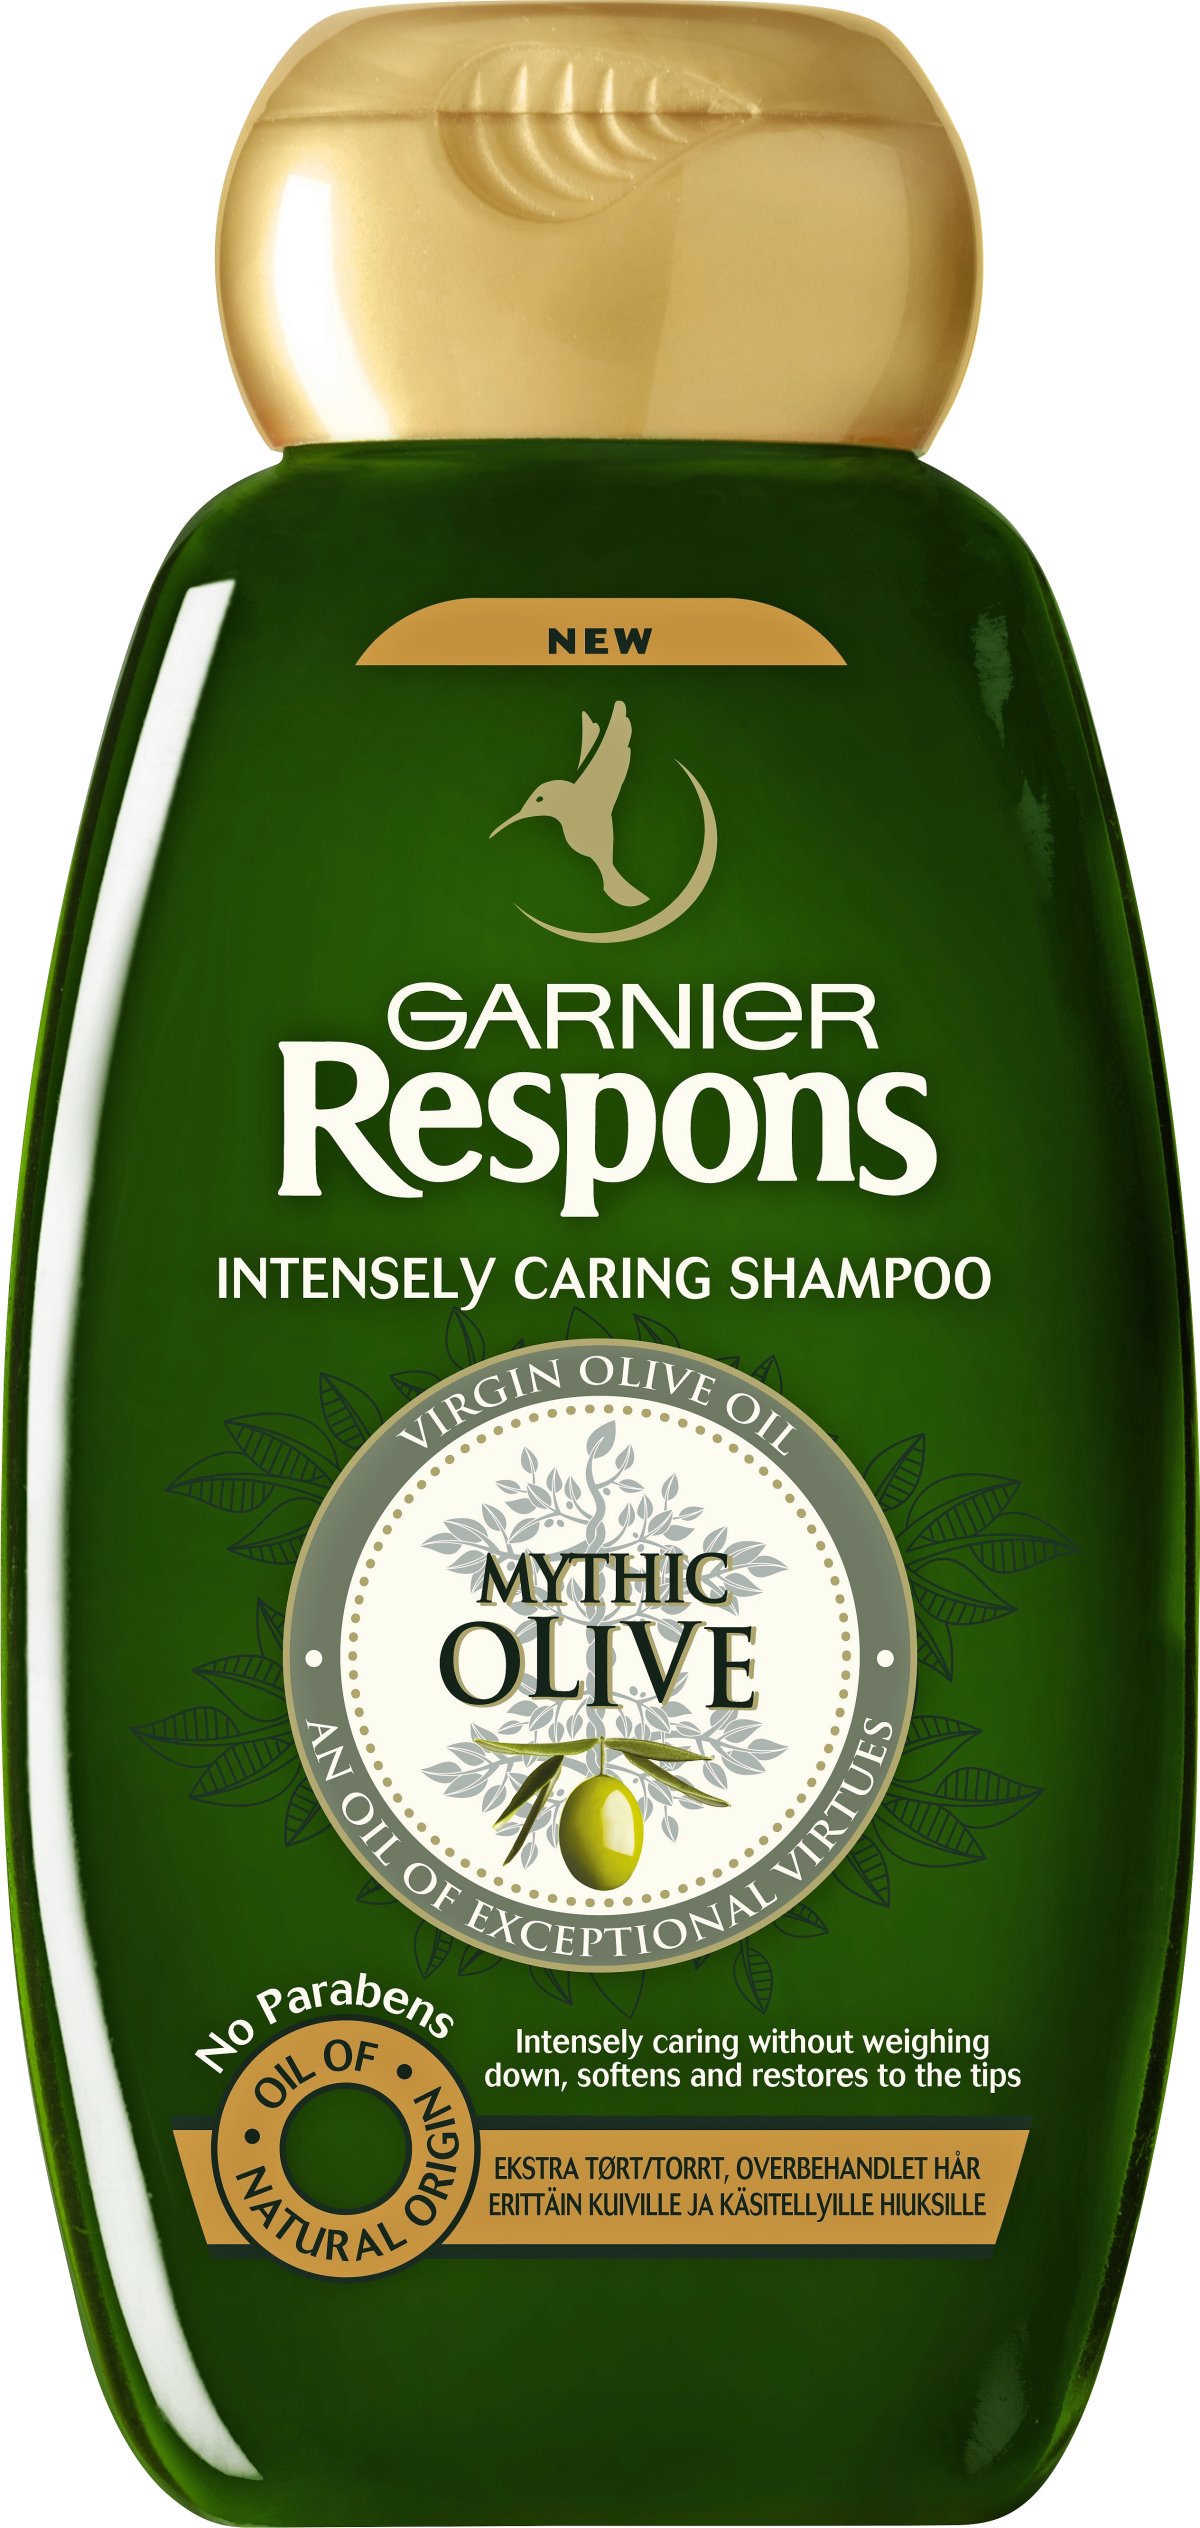 Garnier Respons Shampoo Mythic Olive 250 ml. - PERSONLIG PLEJE - MED MERE .DK